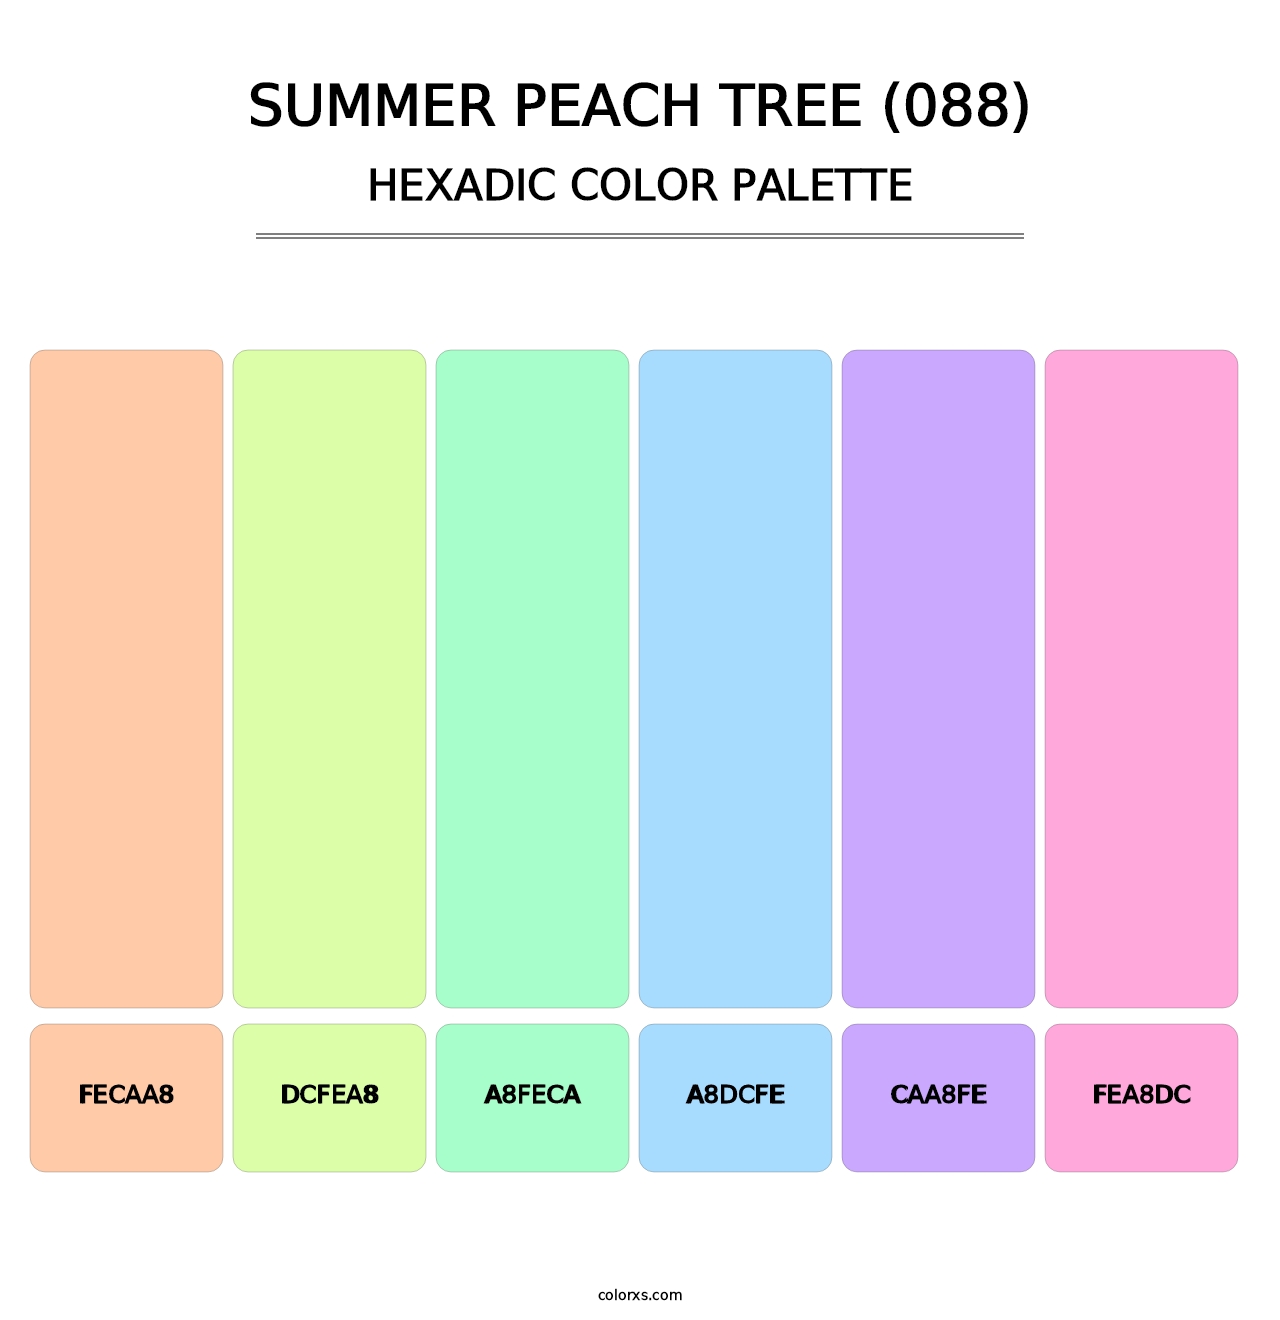 Summer Peach Tree (088) - Hexadic Color Palette